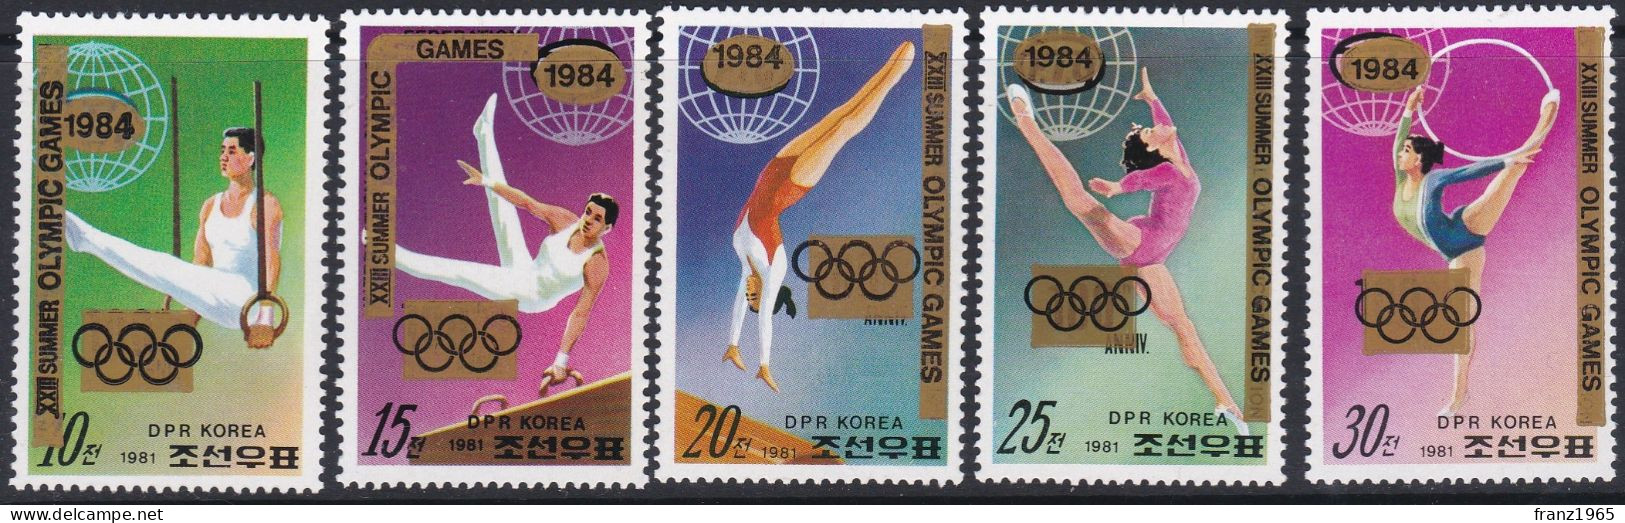 DPR Korea, Olympics Games Los Angeles 1984 - Gymnastik